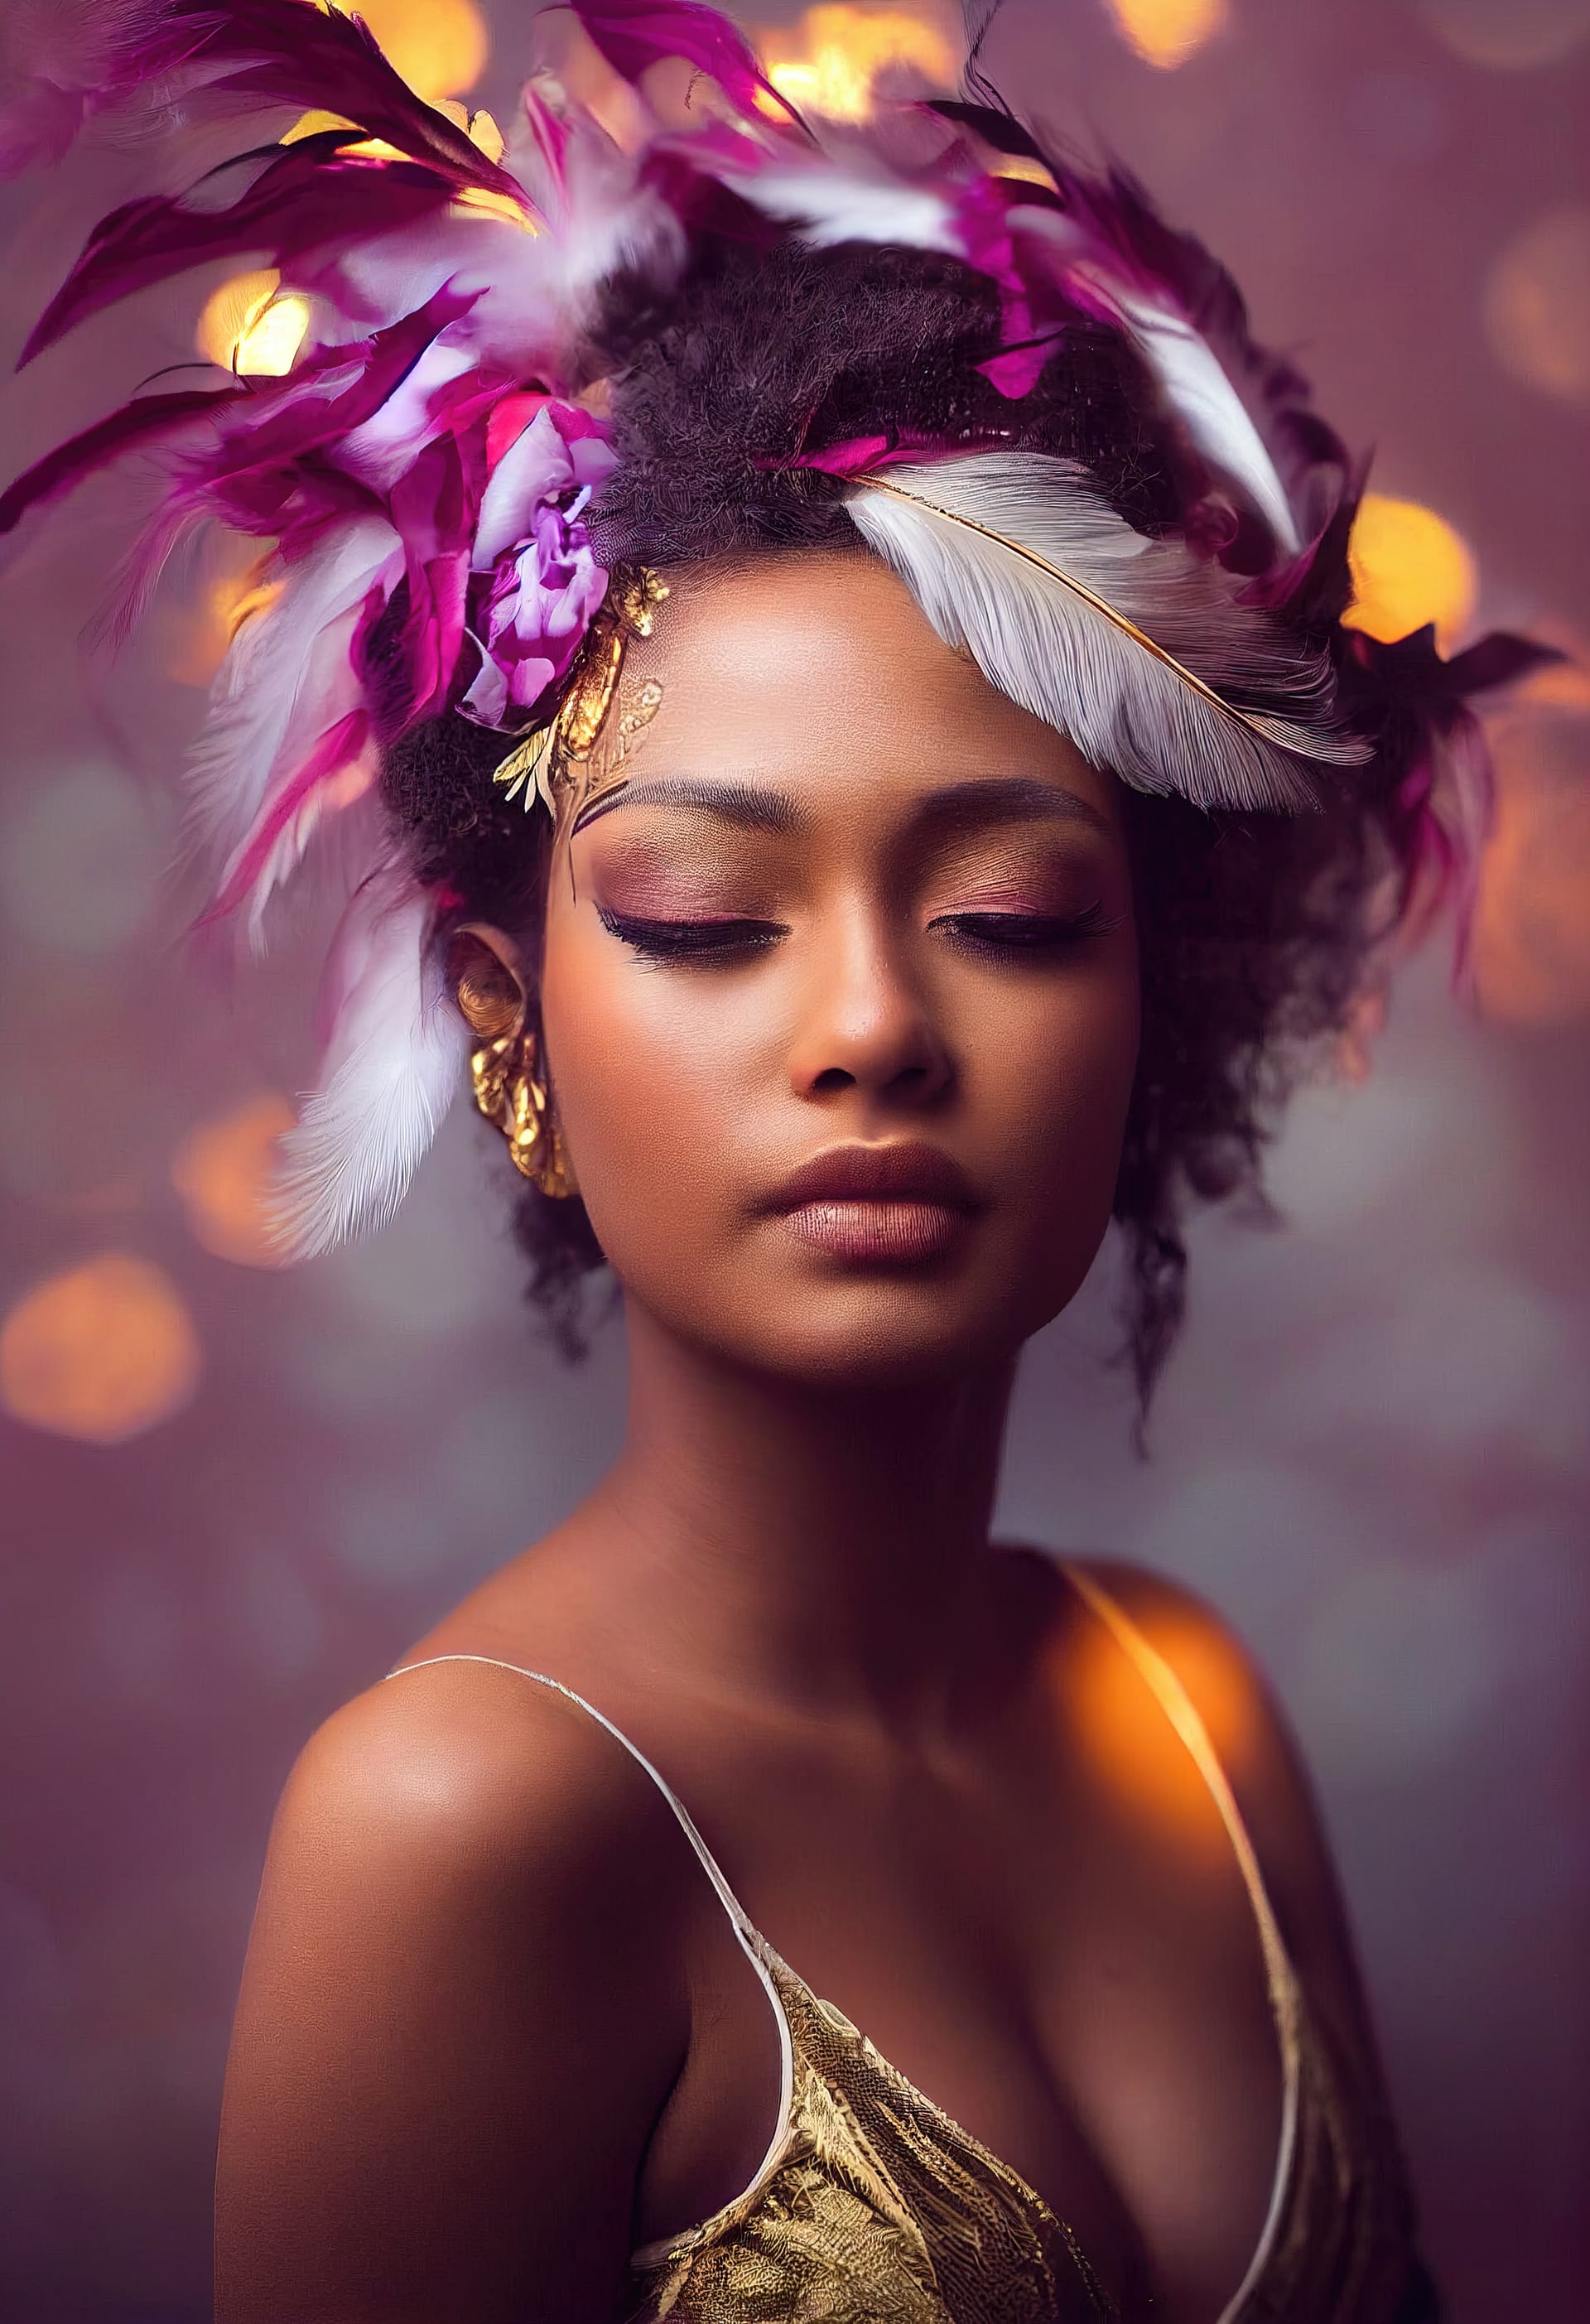 Abstract portrait fantasy ebony girl fashionable painted woman creative beautiful girl